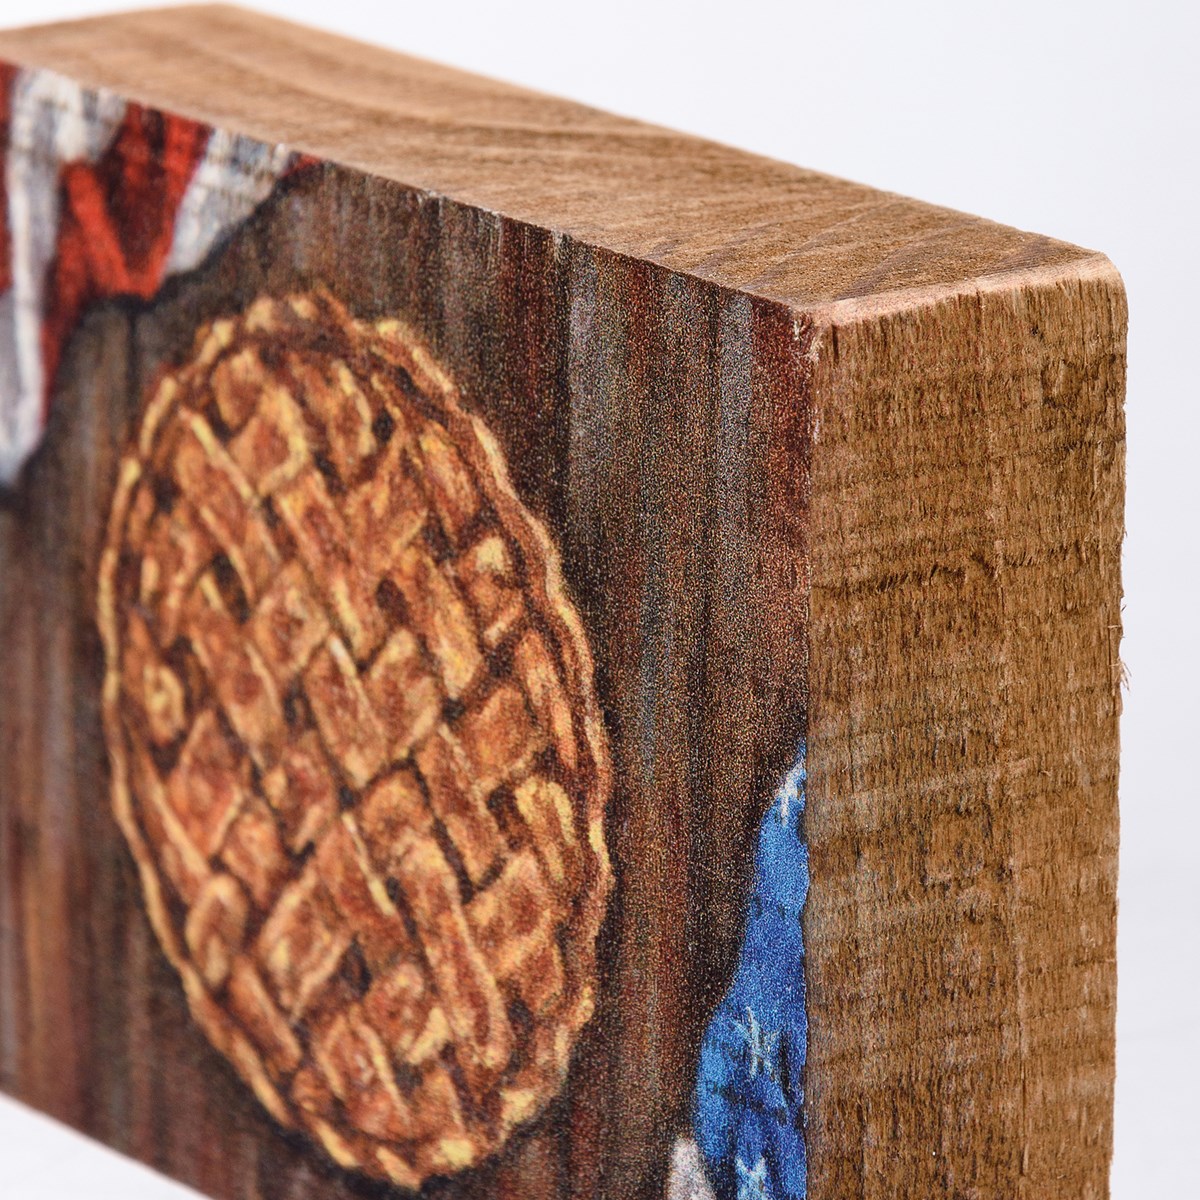 Apple Pie Block Sign - Wood